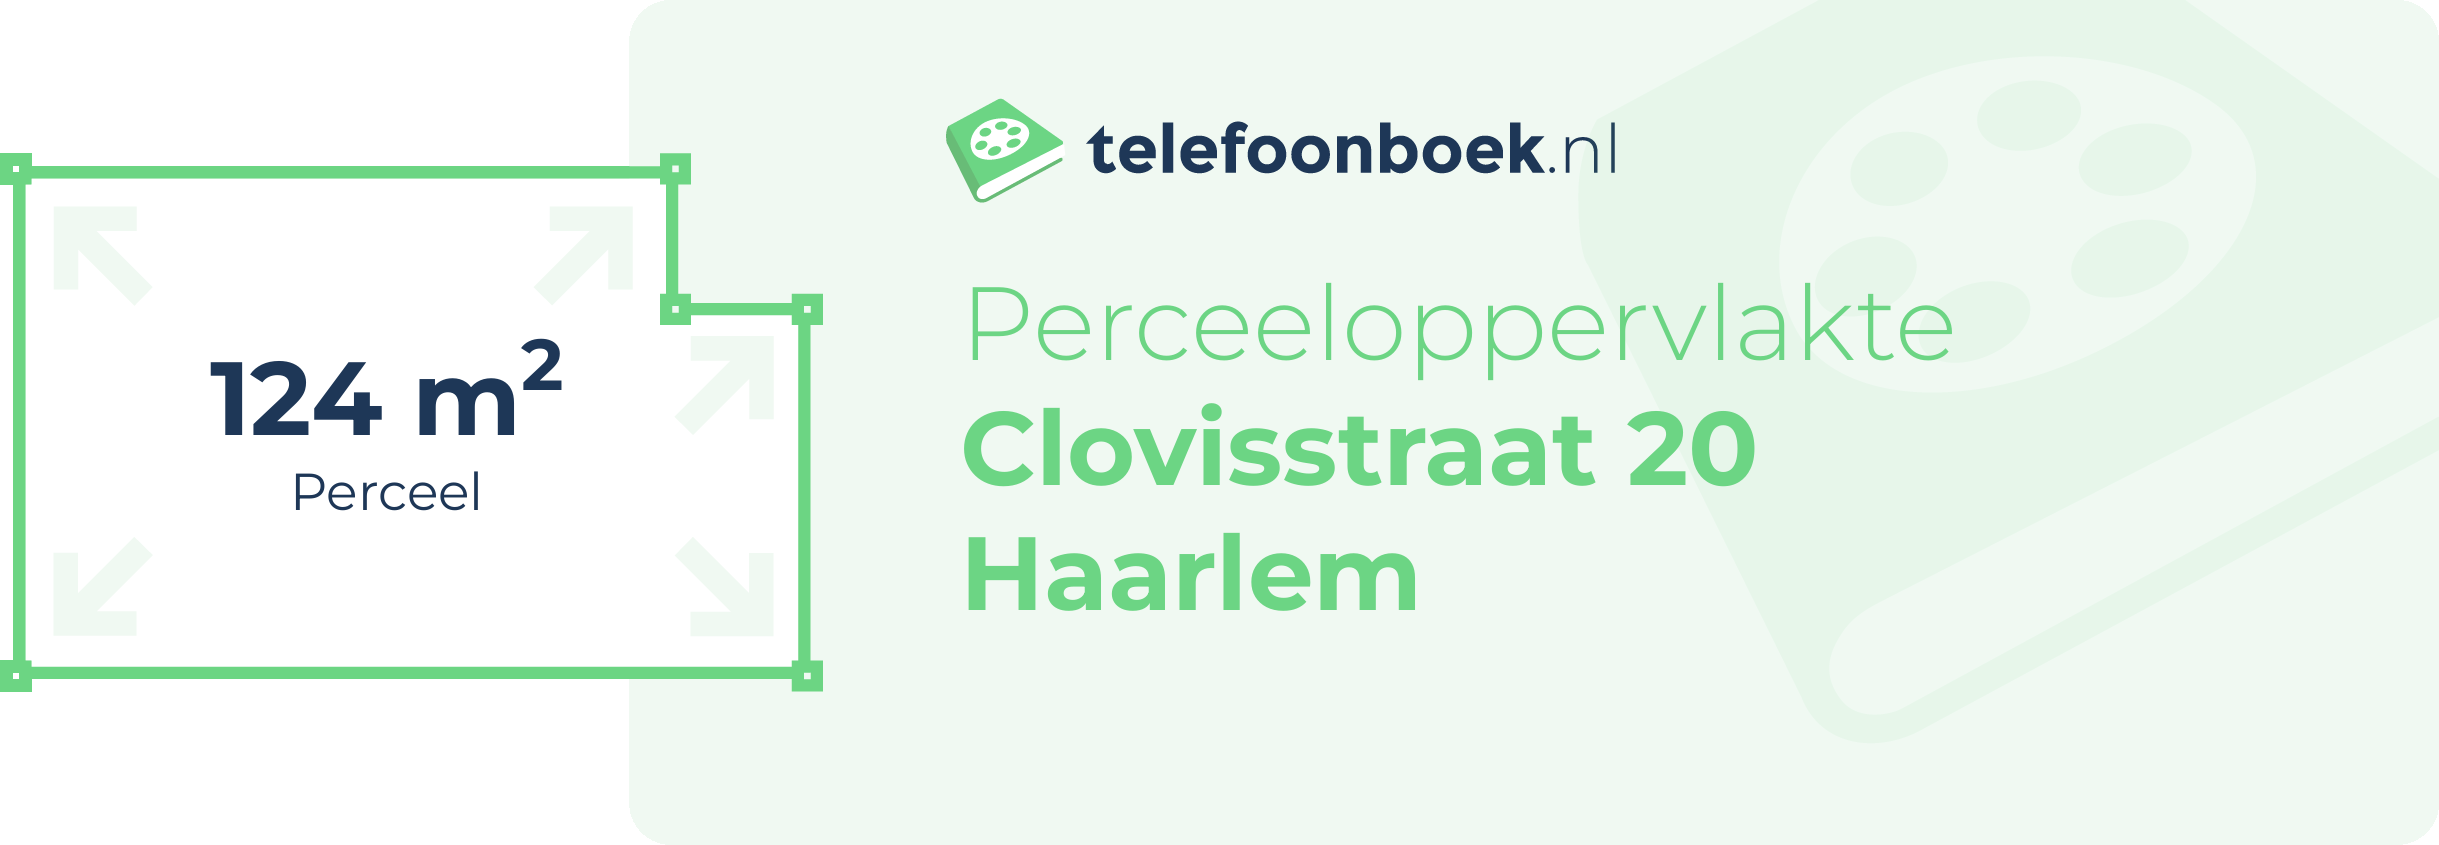 Perceeloppervlakte Clovisstraat 20 Haarlem